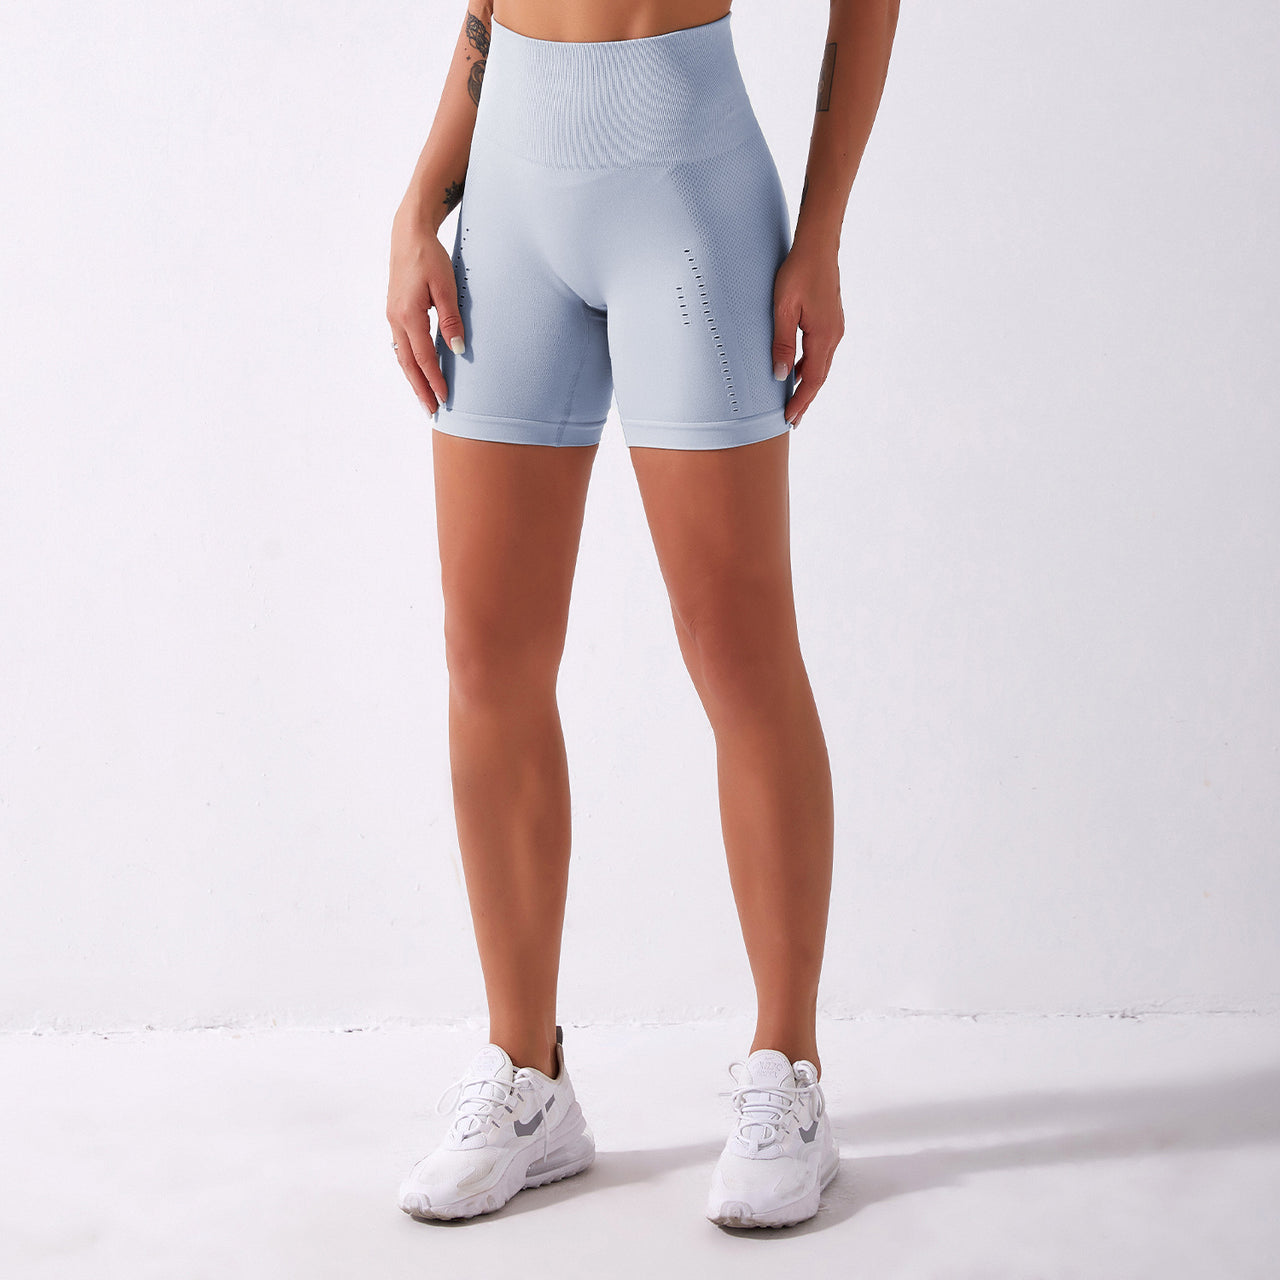 PureComfort Yoga Shorts